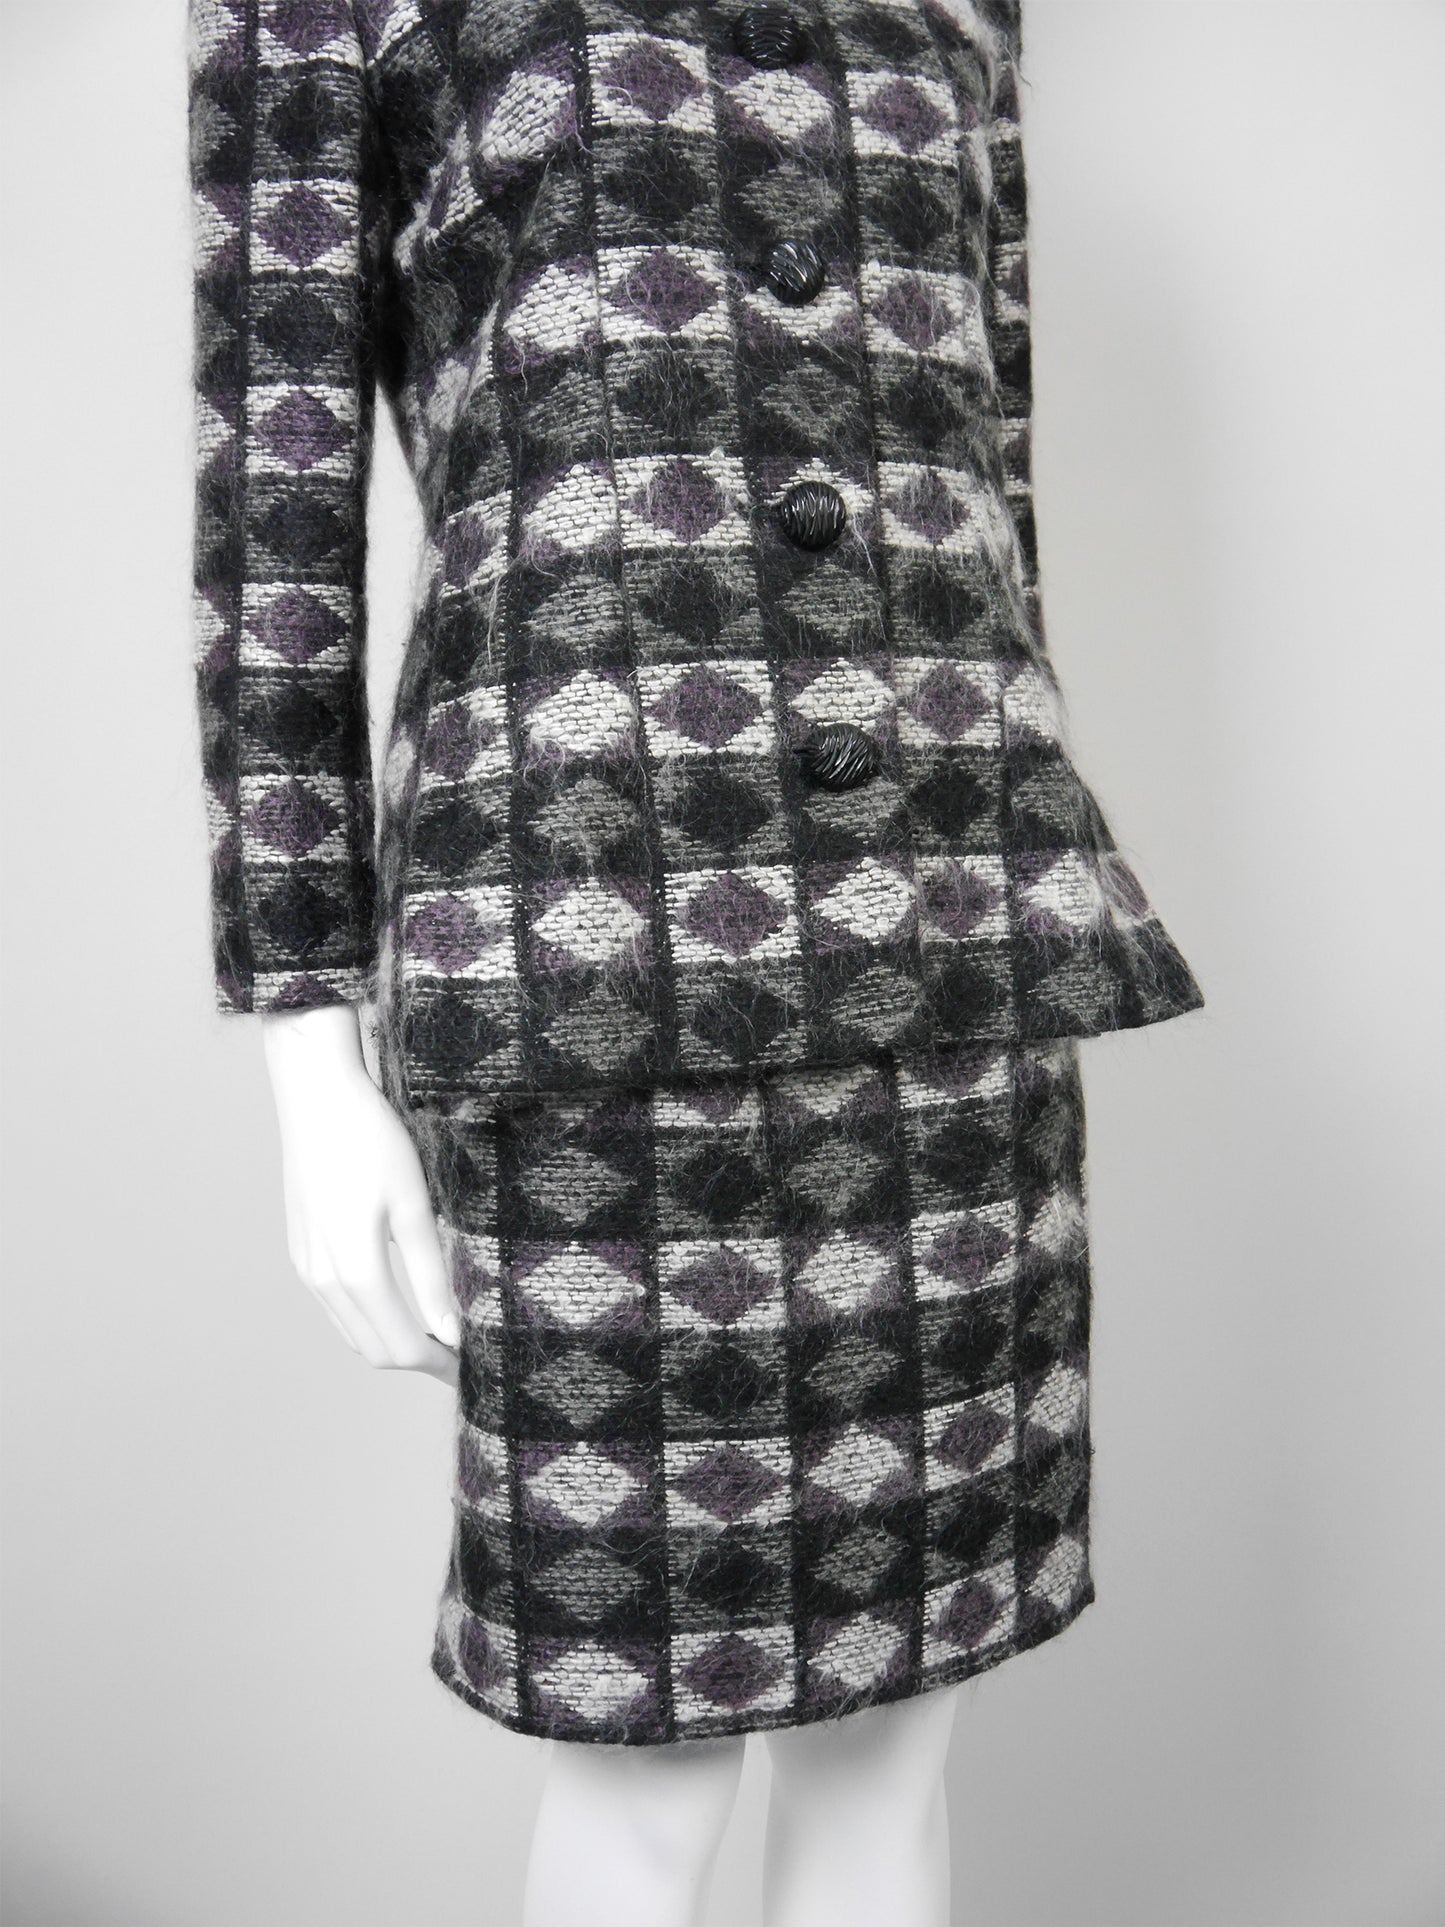 PIERRE BALMAIN Couture 1970s Vintage Fuzzy Wool Jacket & Skirt Suit Size S-M